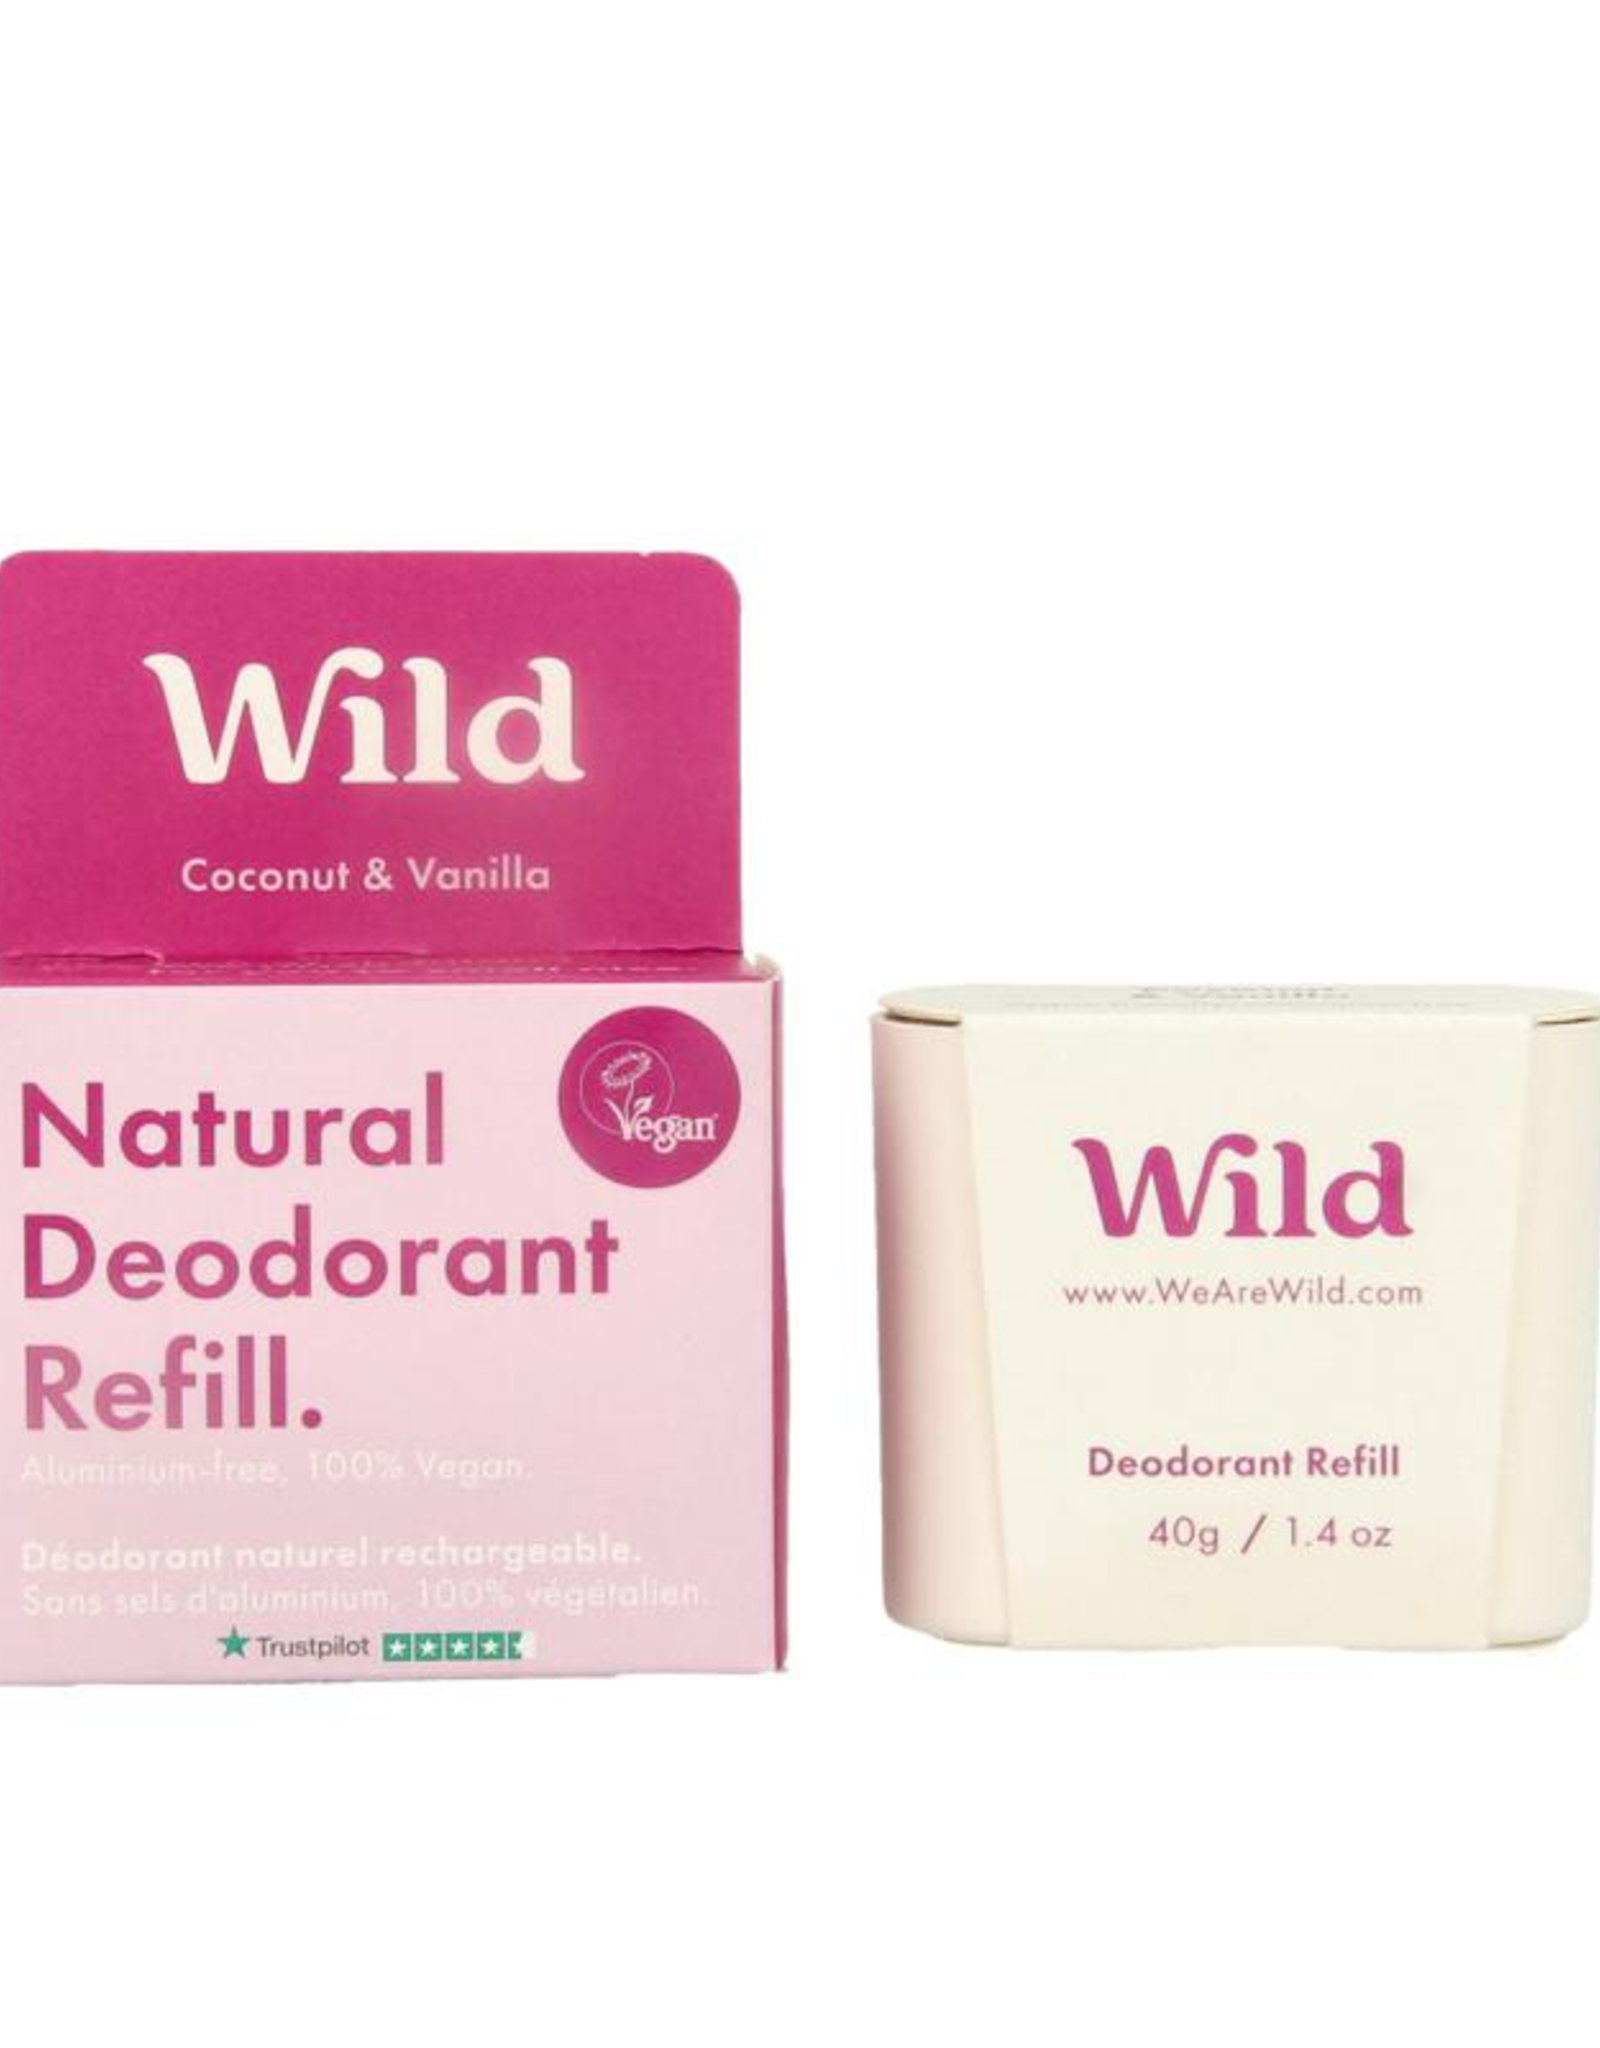 Wild Wild Natural deodorant coconut & vanilla refill 40g